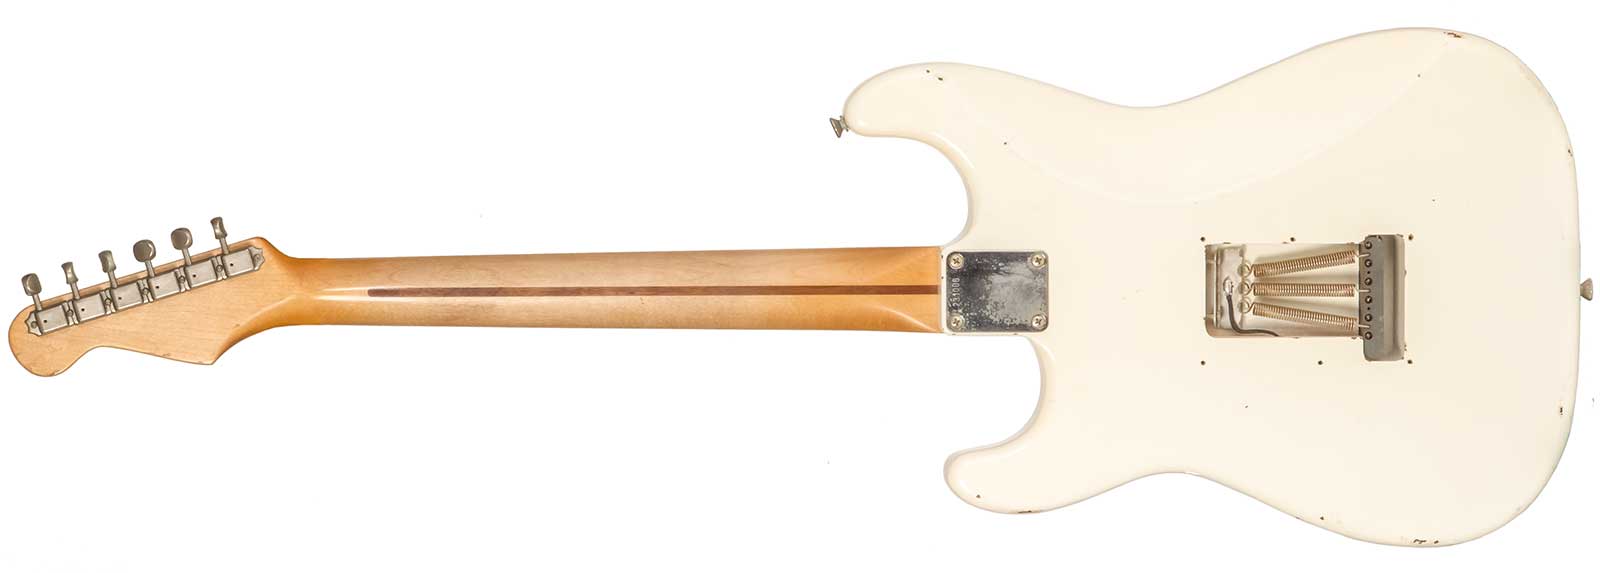 Rebelrelic S-series 1955 3s Trem Mn #231006 - Olympic White - Str shape electric guitar - Variation 1